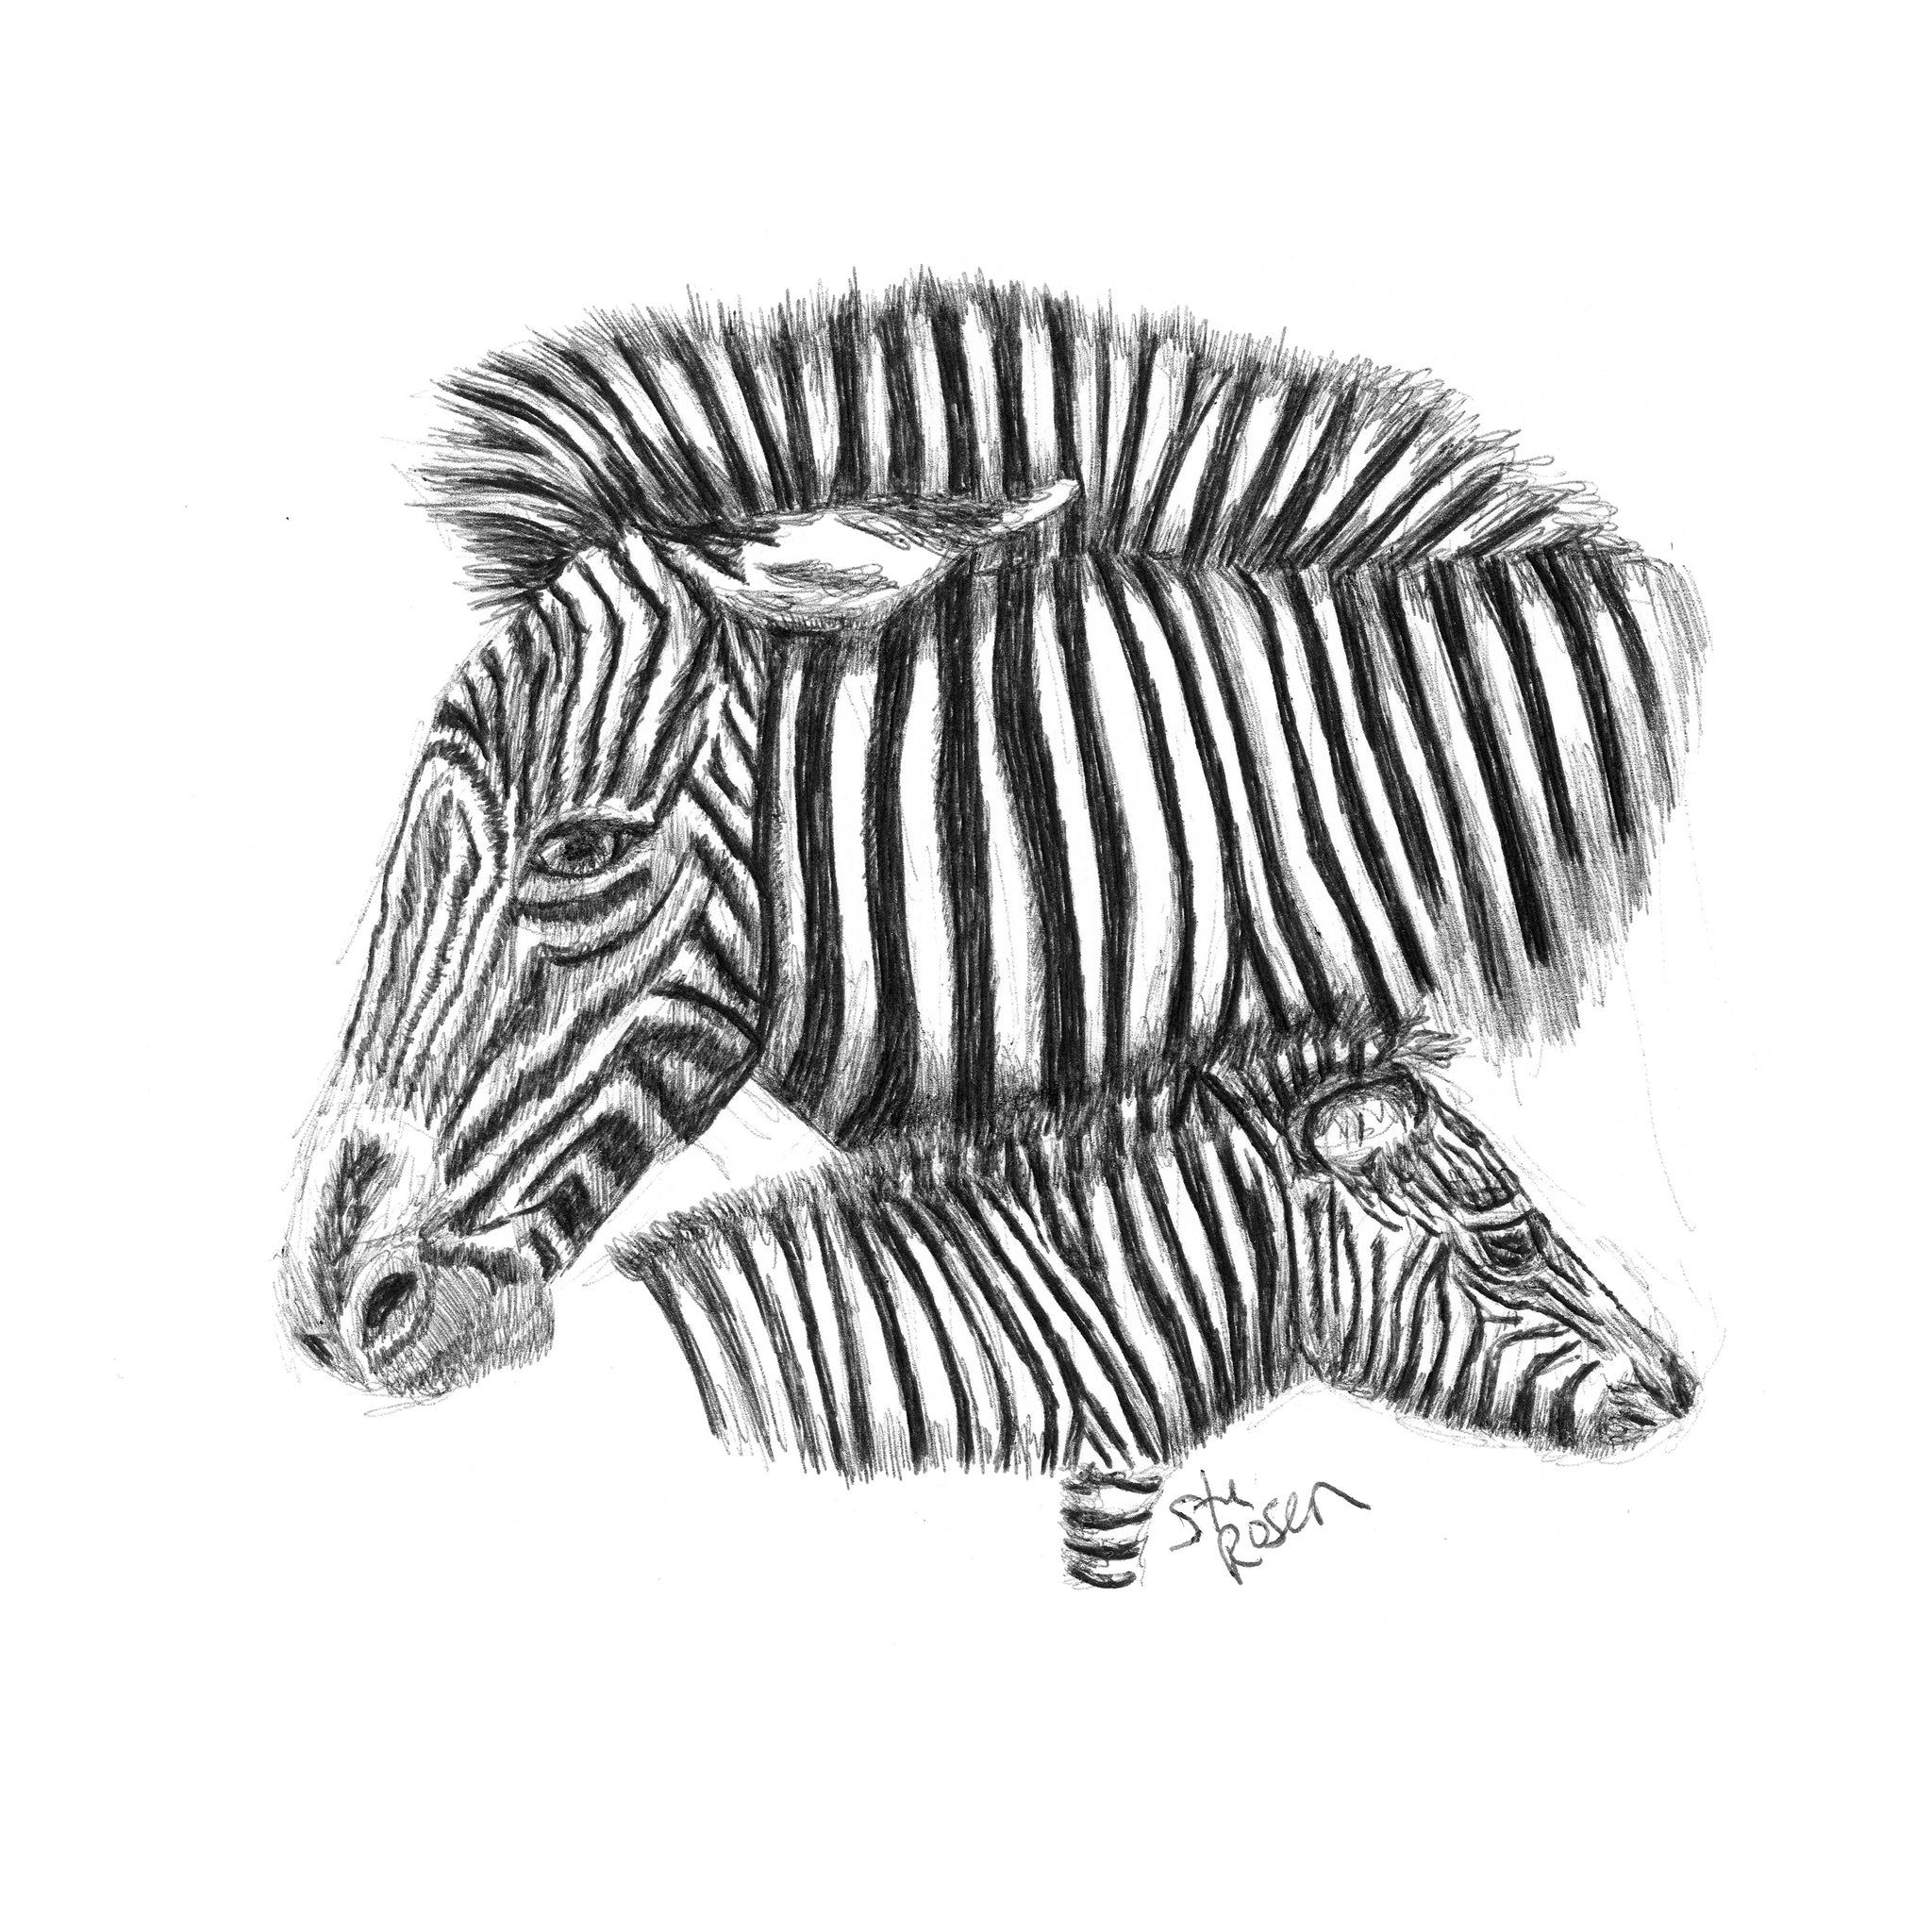 Zebra - "Pattern"